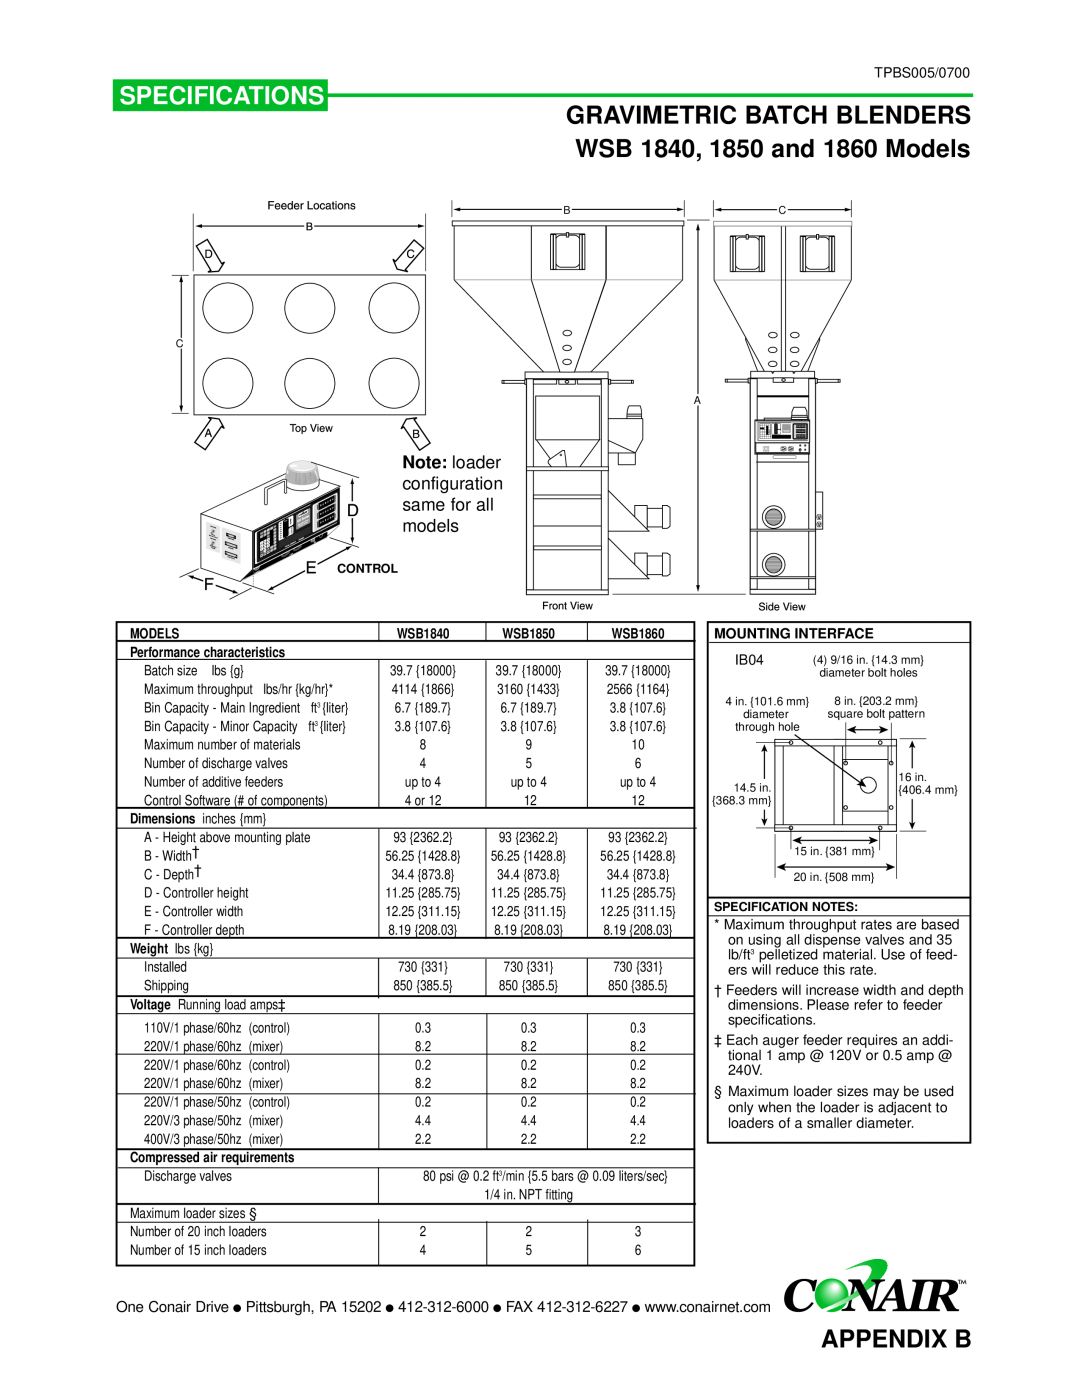 Conair GB manual WSB 1840, 1850 and 1860 Models, Specifications, Gravimetric Batch Blenders, Appendix B, Note: loader 